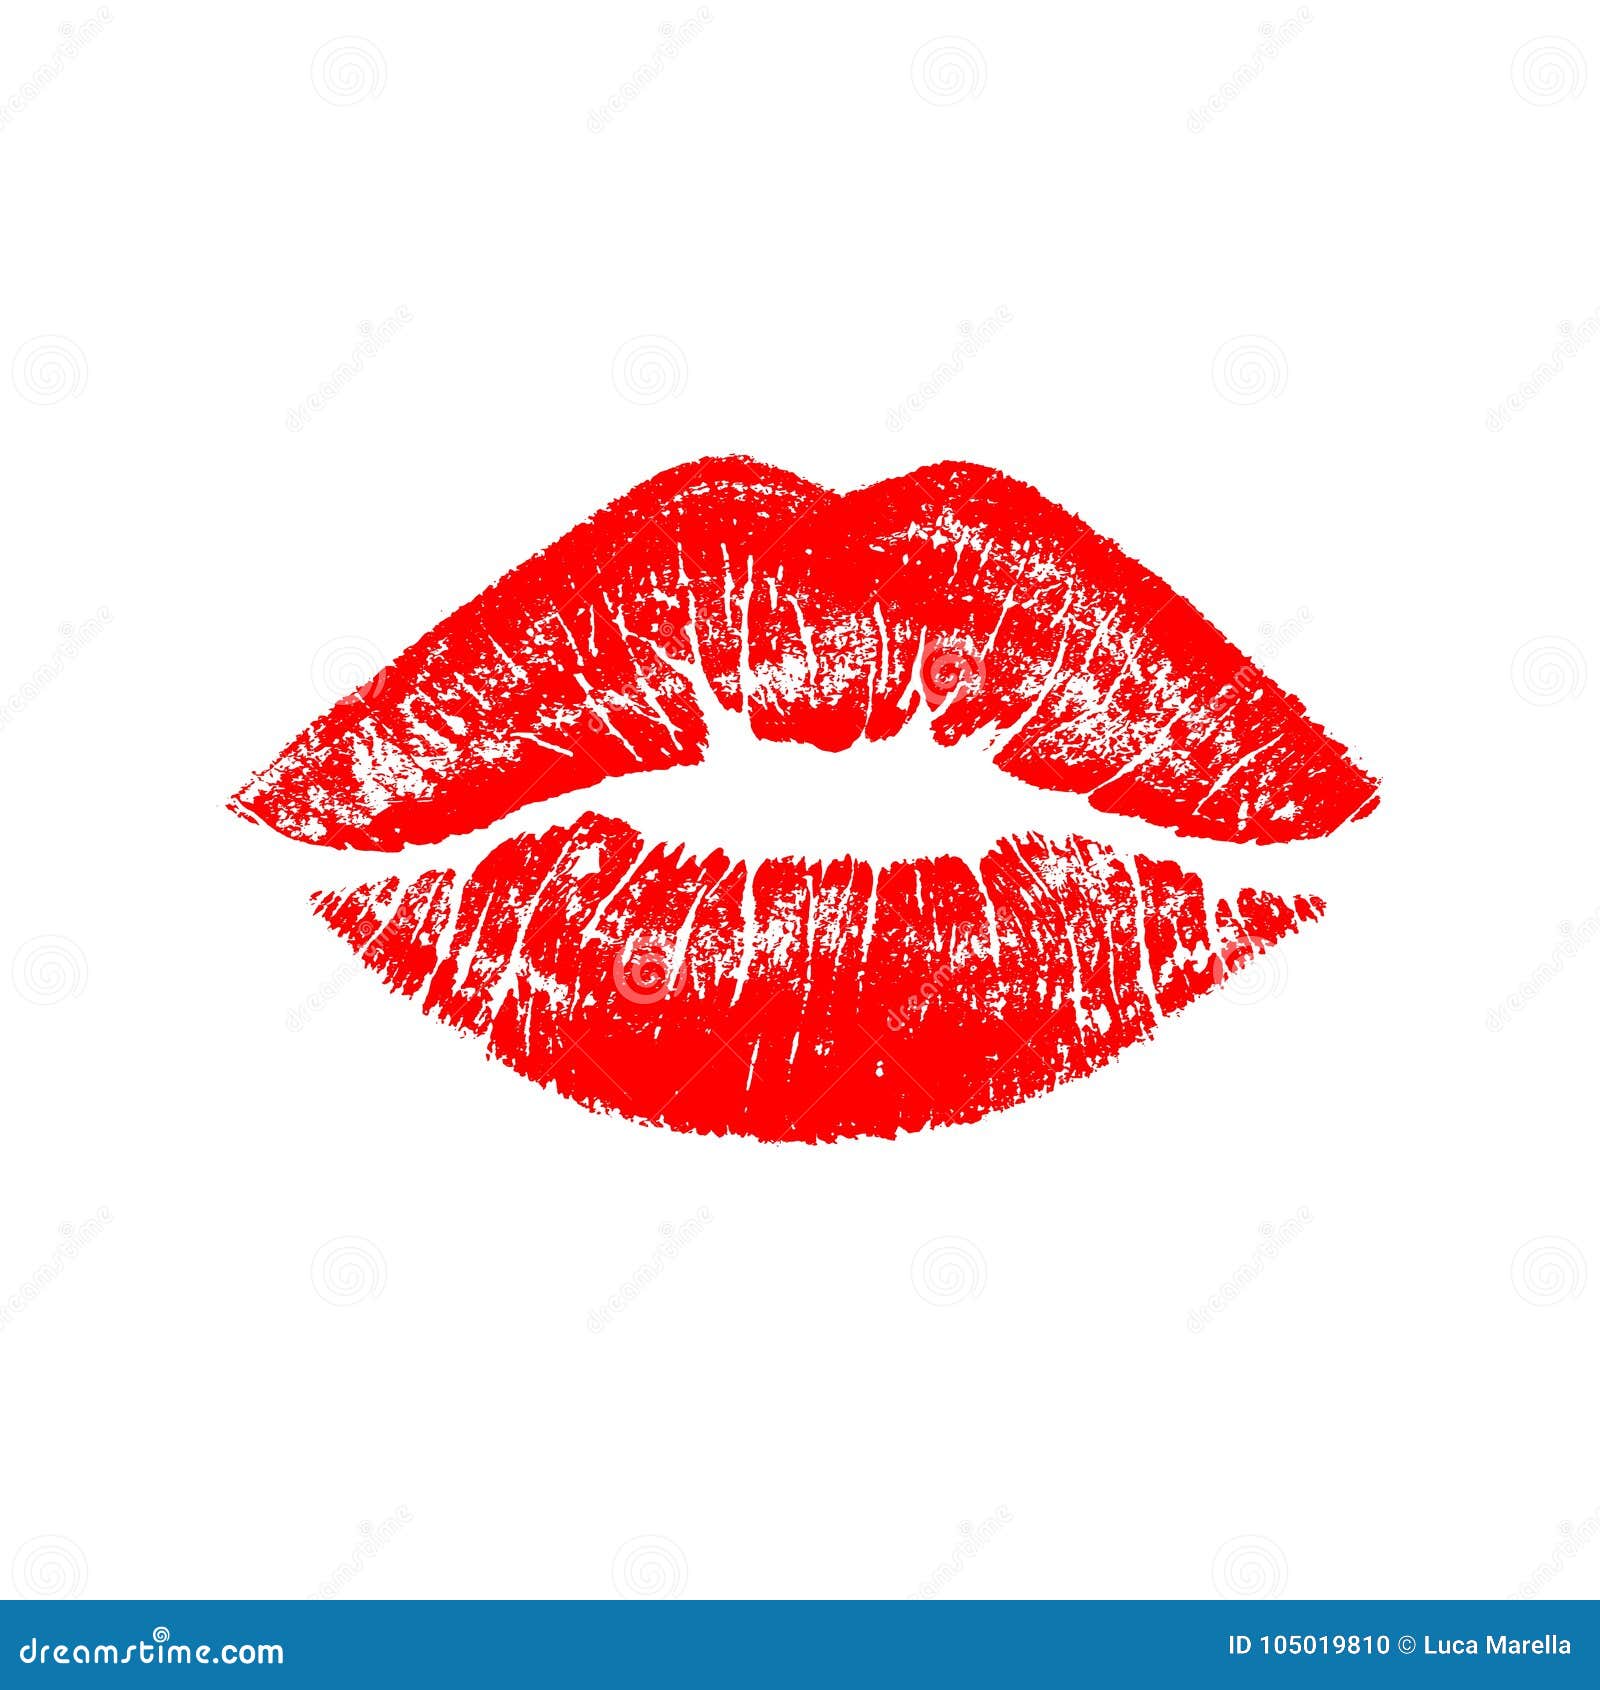 kiss stamp - png